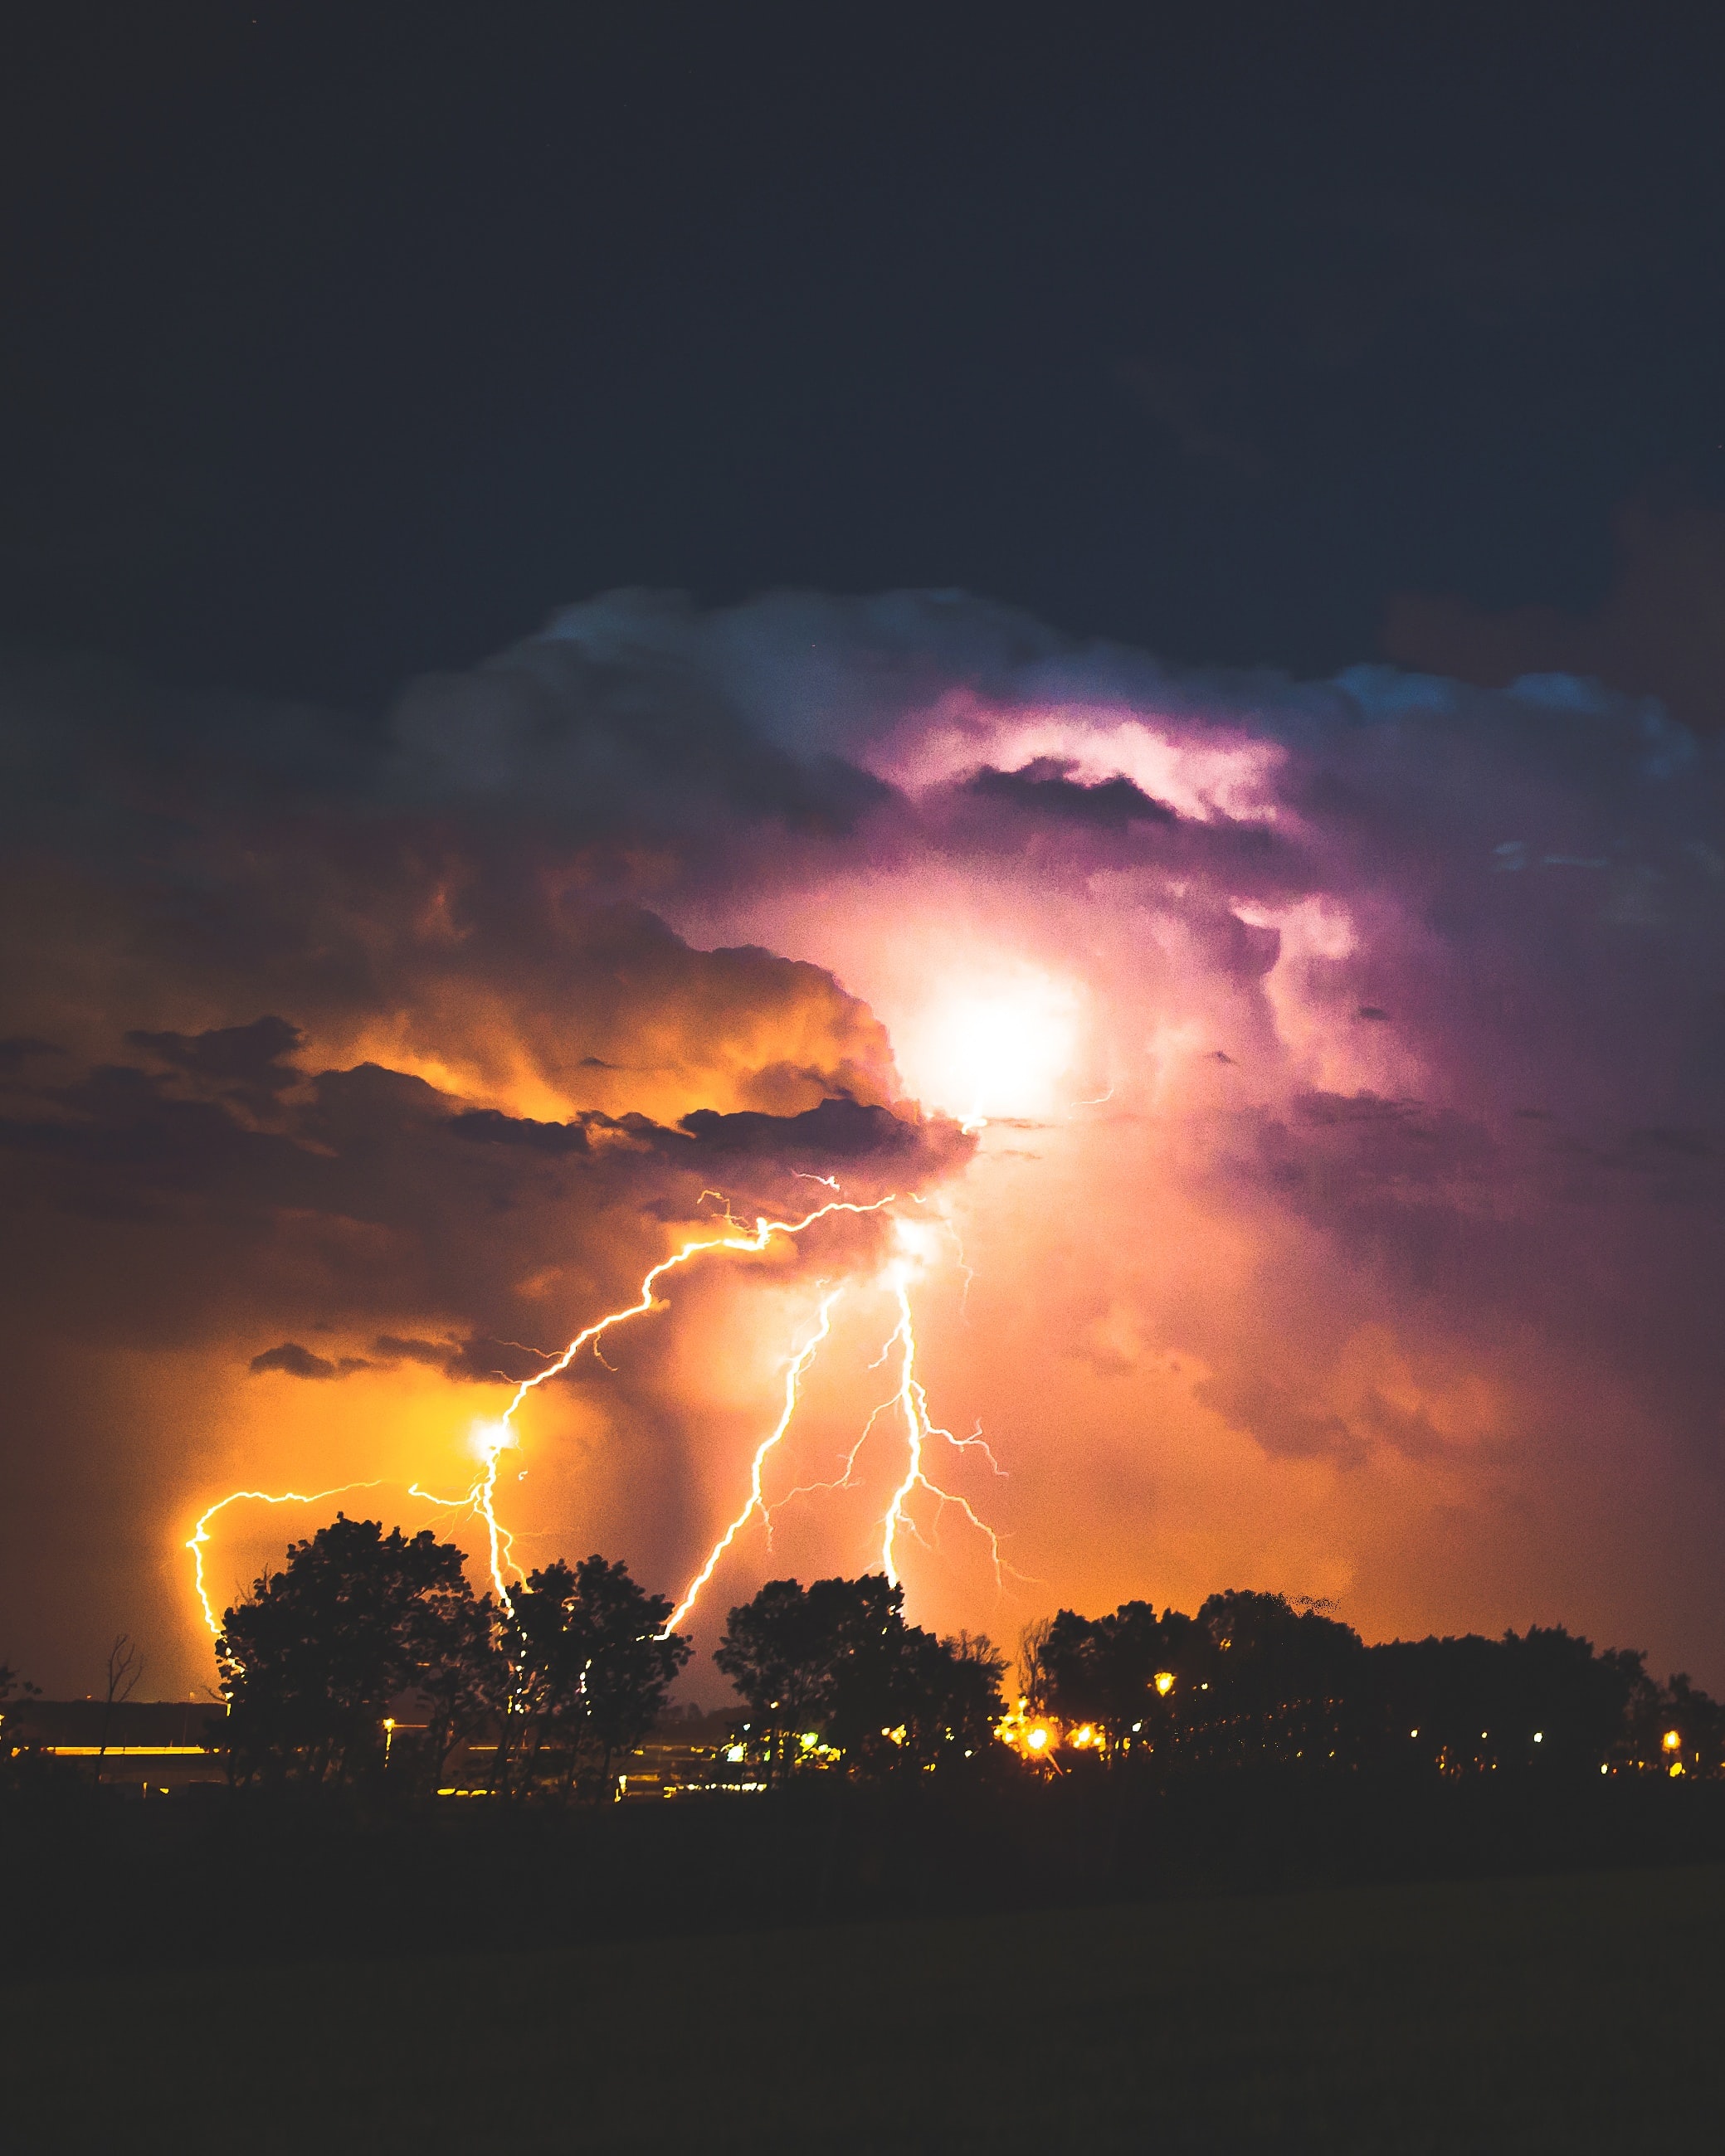 lightning striking trees